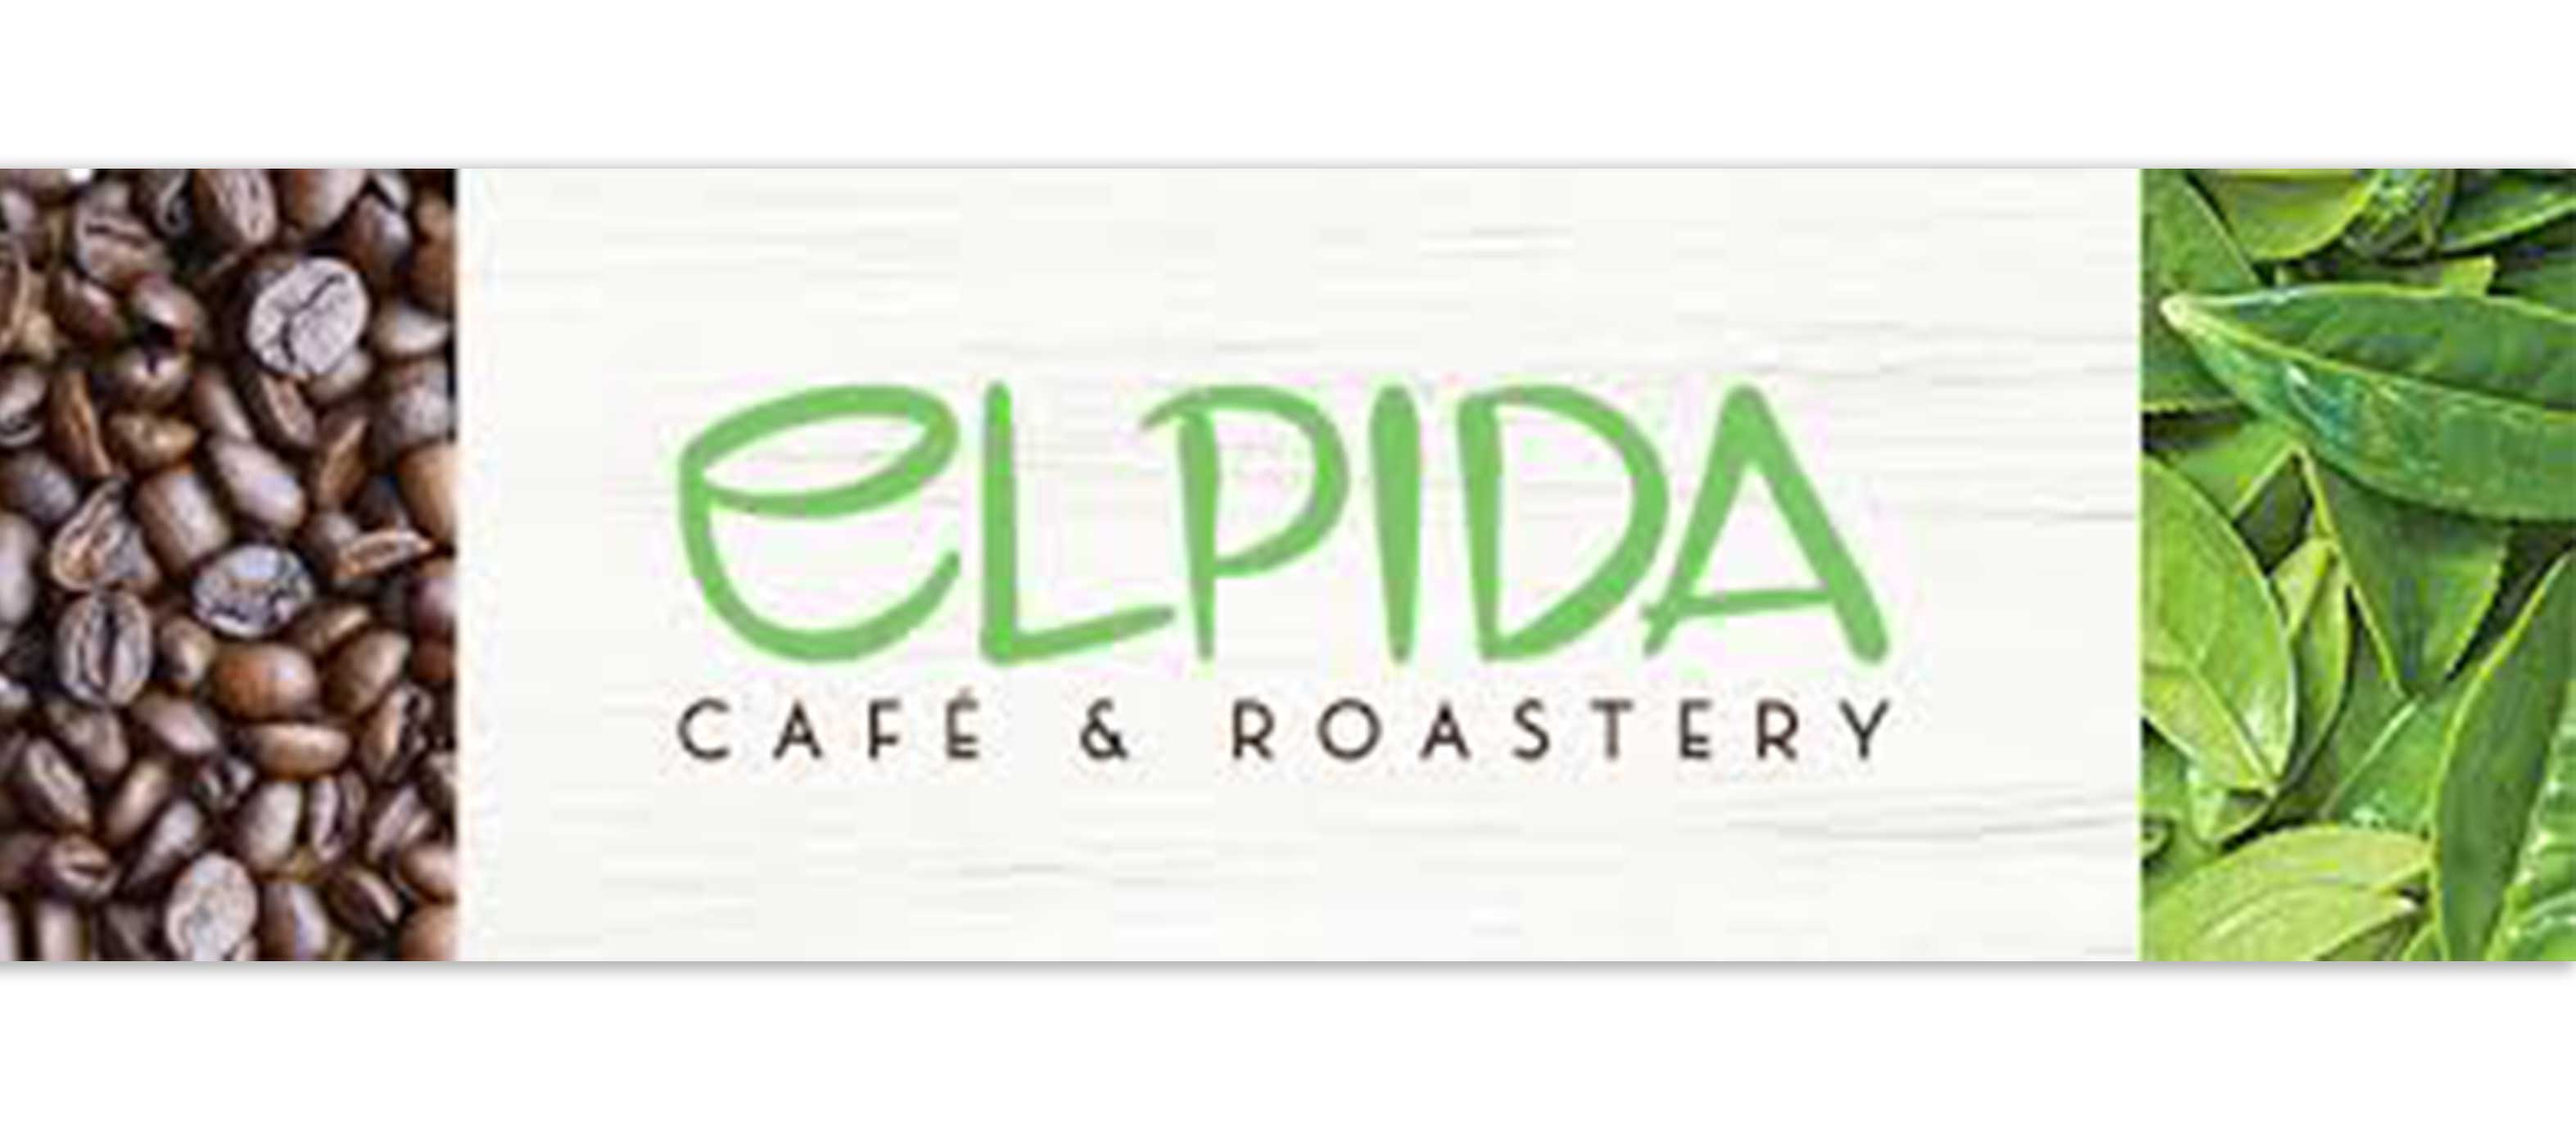 Elpida Cafe & Roastery